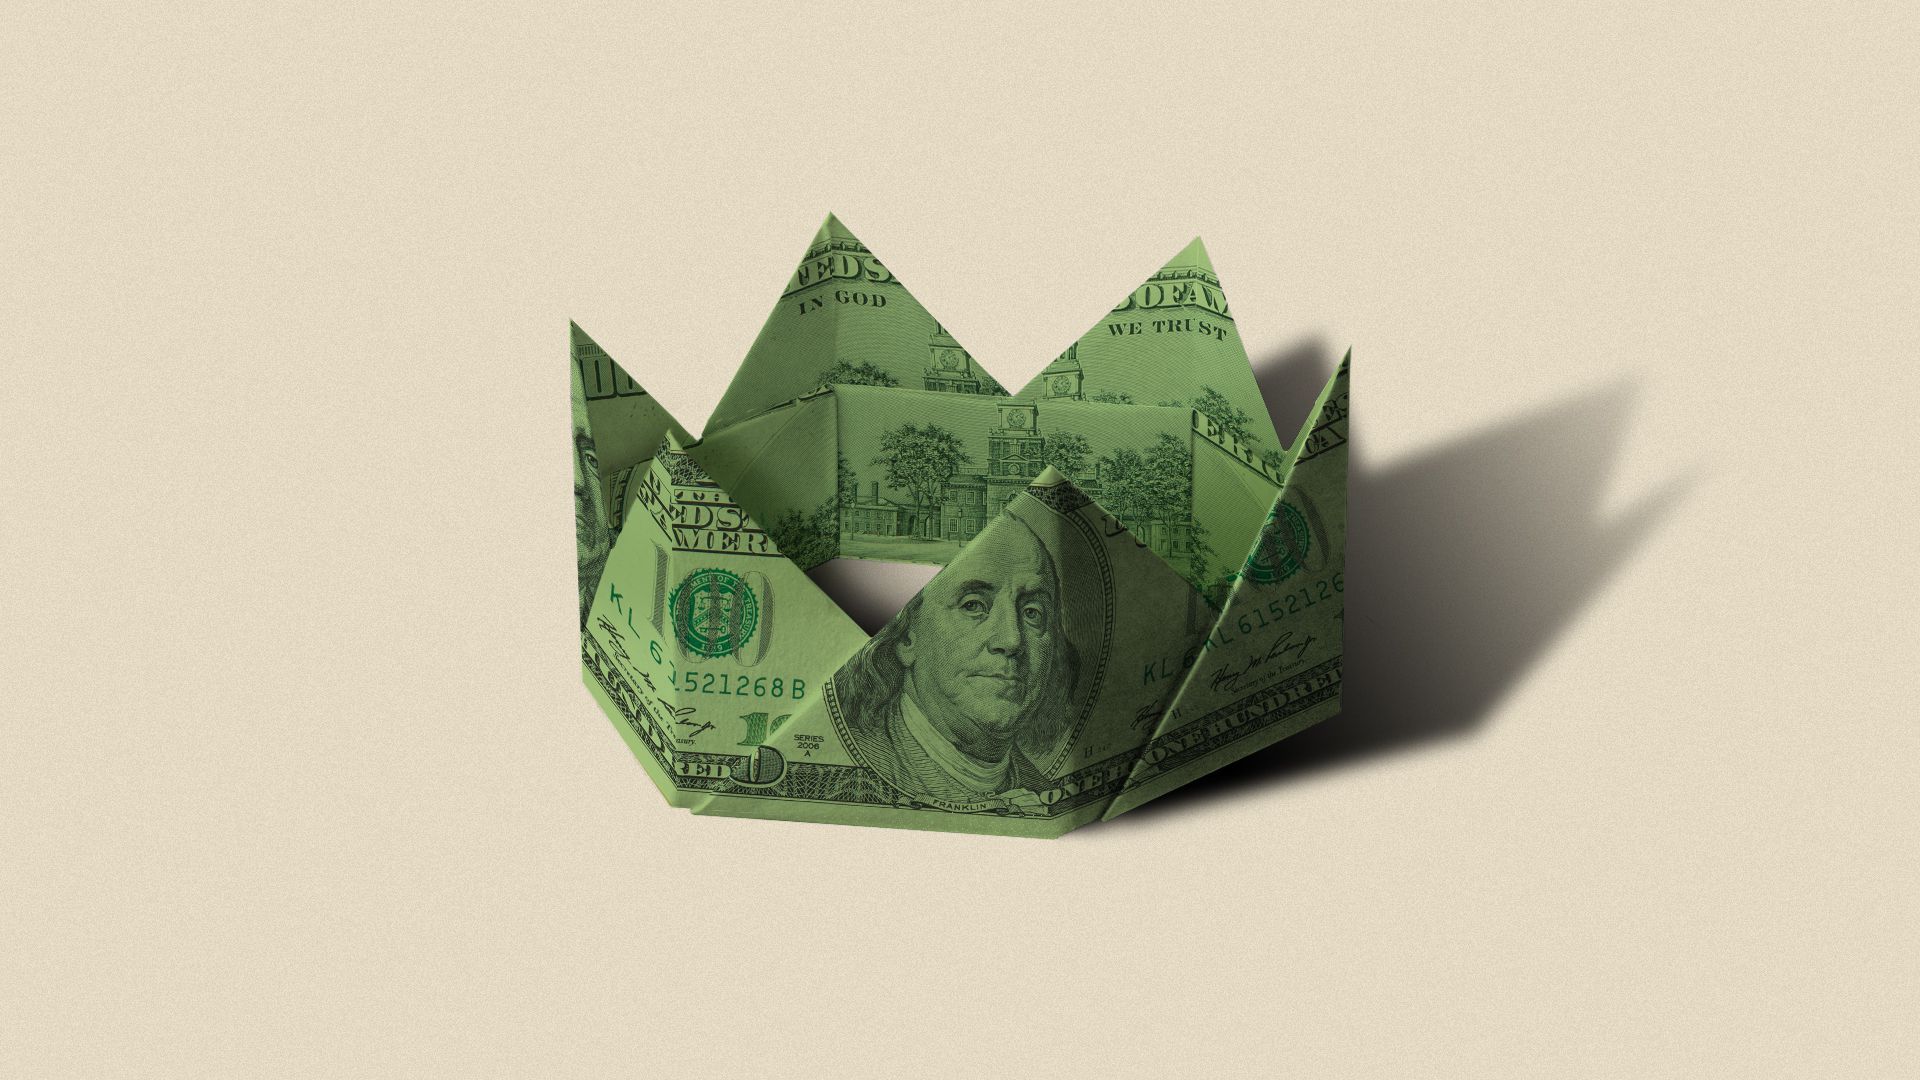 Illustration of a green crown made of folded dollar bills